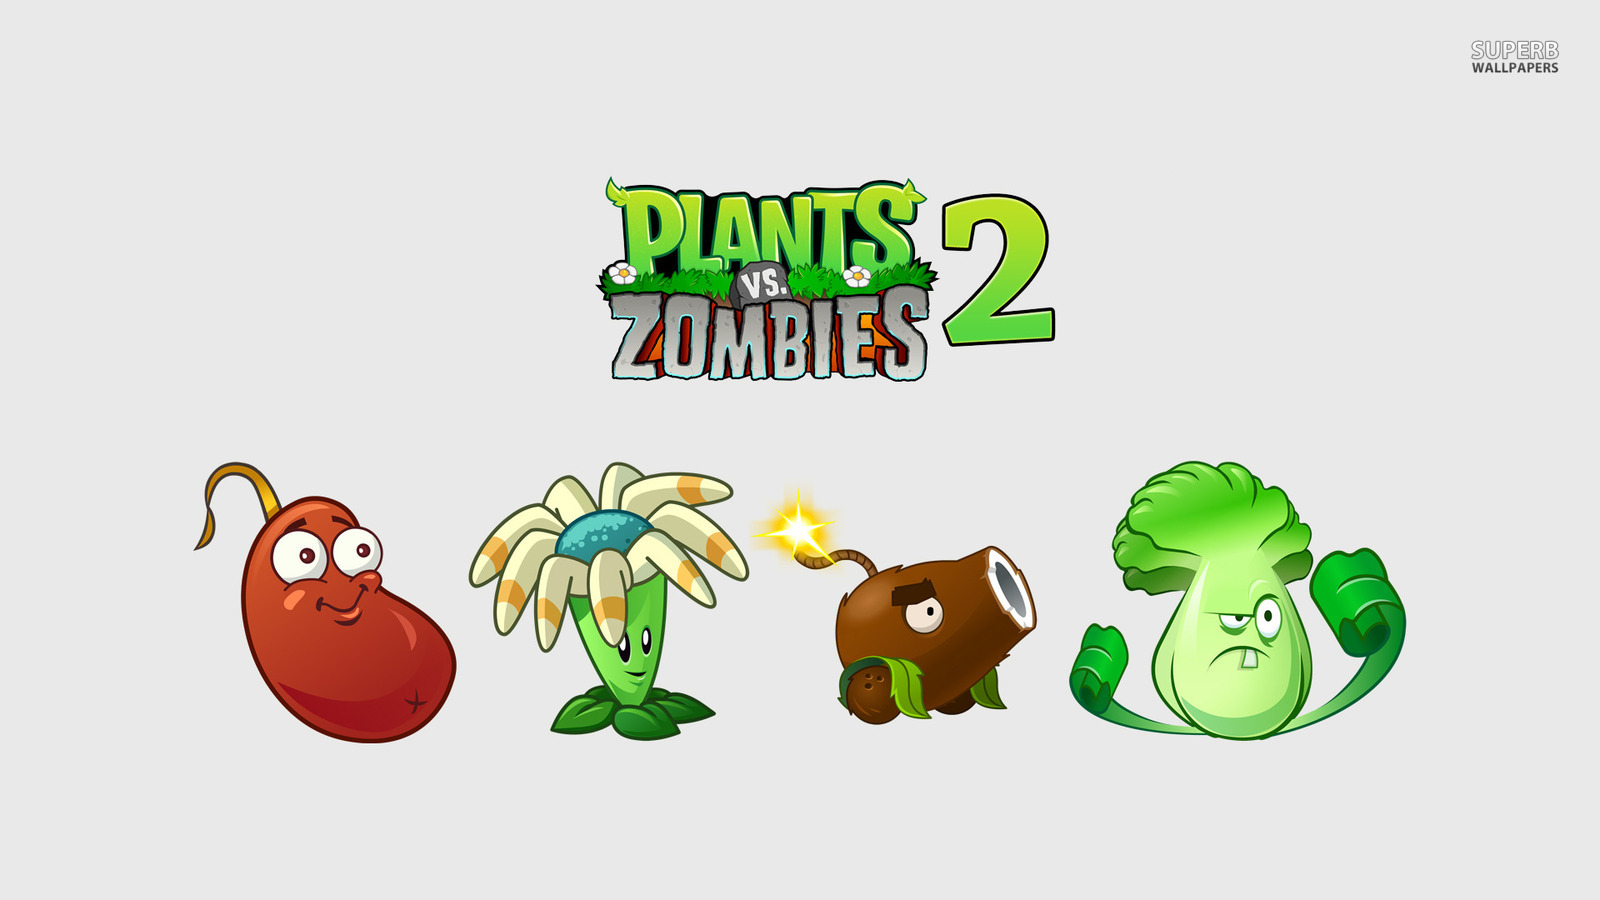 Plants vs. Zombies 2 - video juegos fondo de pantalla (38707869) - fanpop